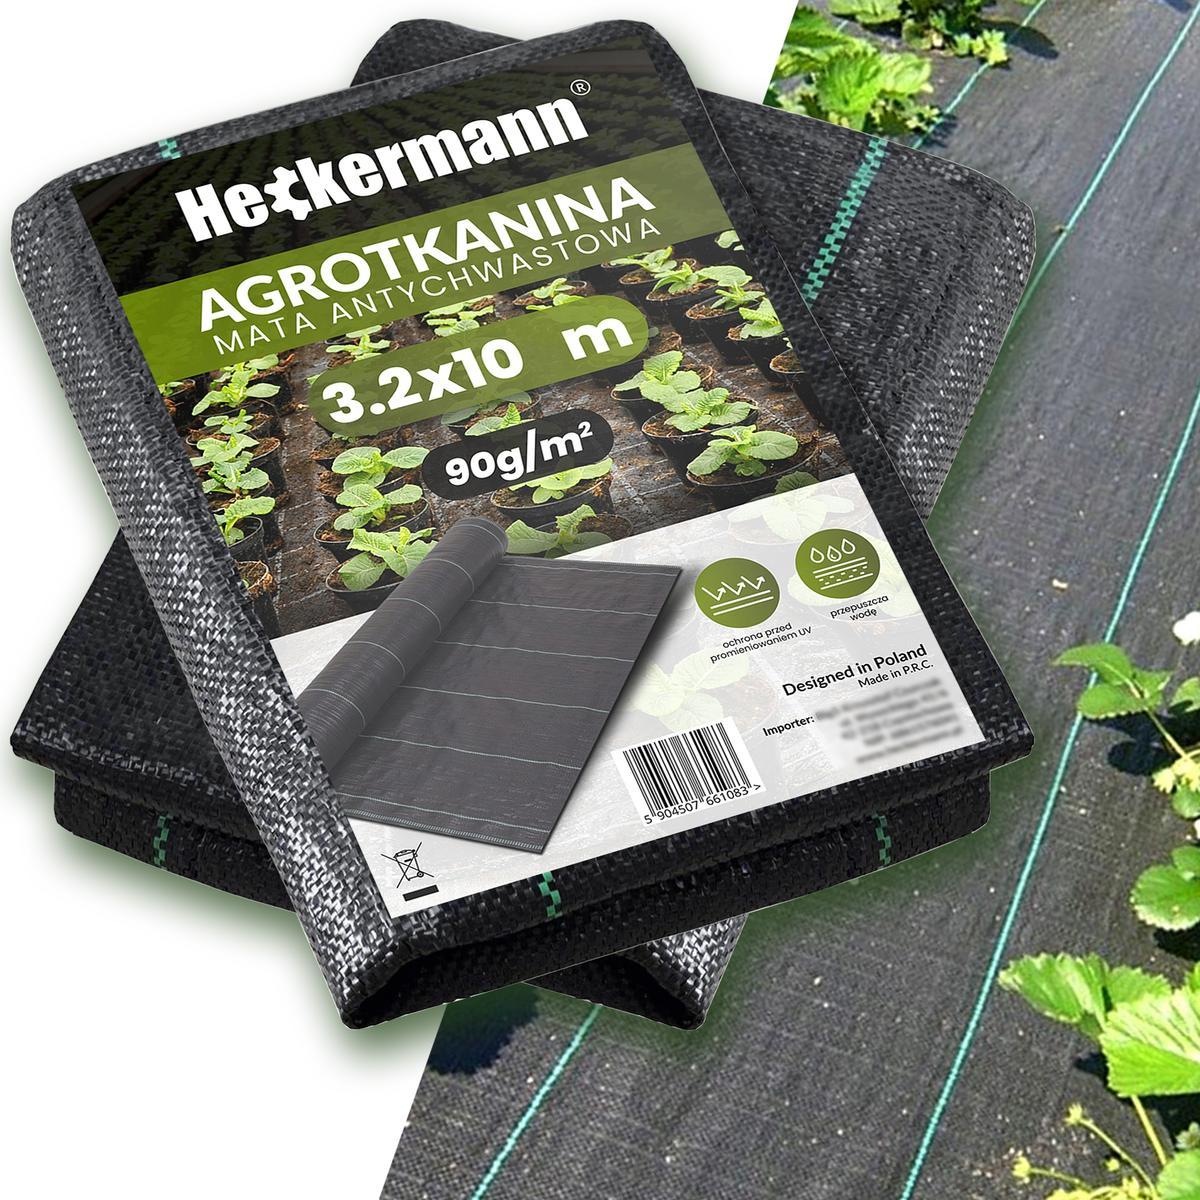 Agrotkanina Heckermann 3,2x10m 90g/m2 Czarna nr. 1